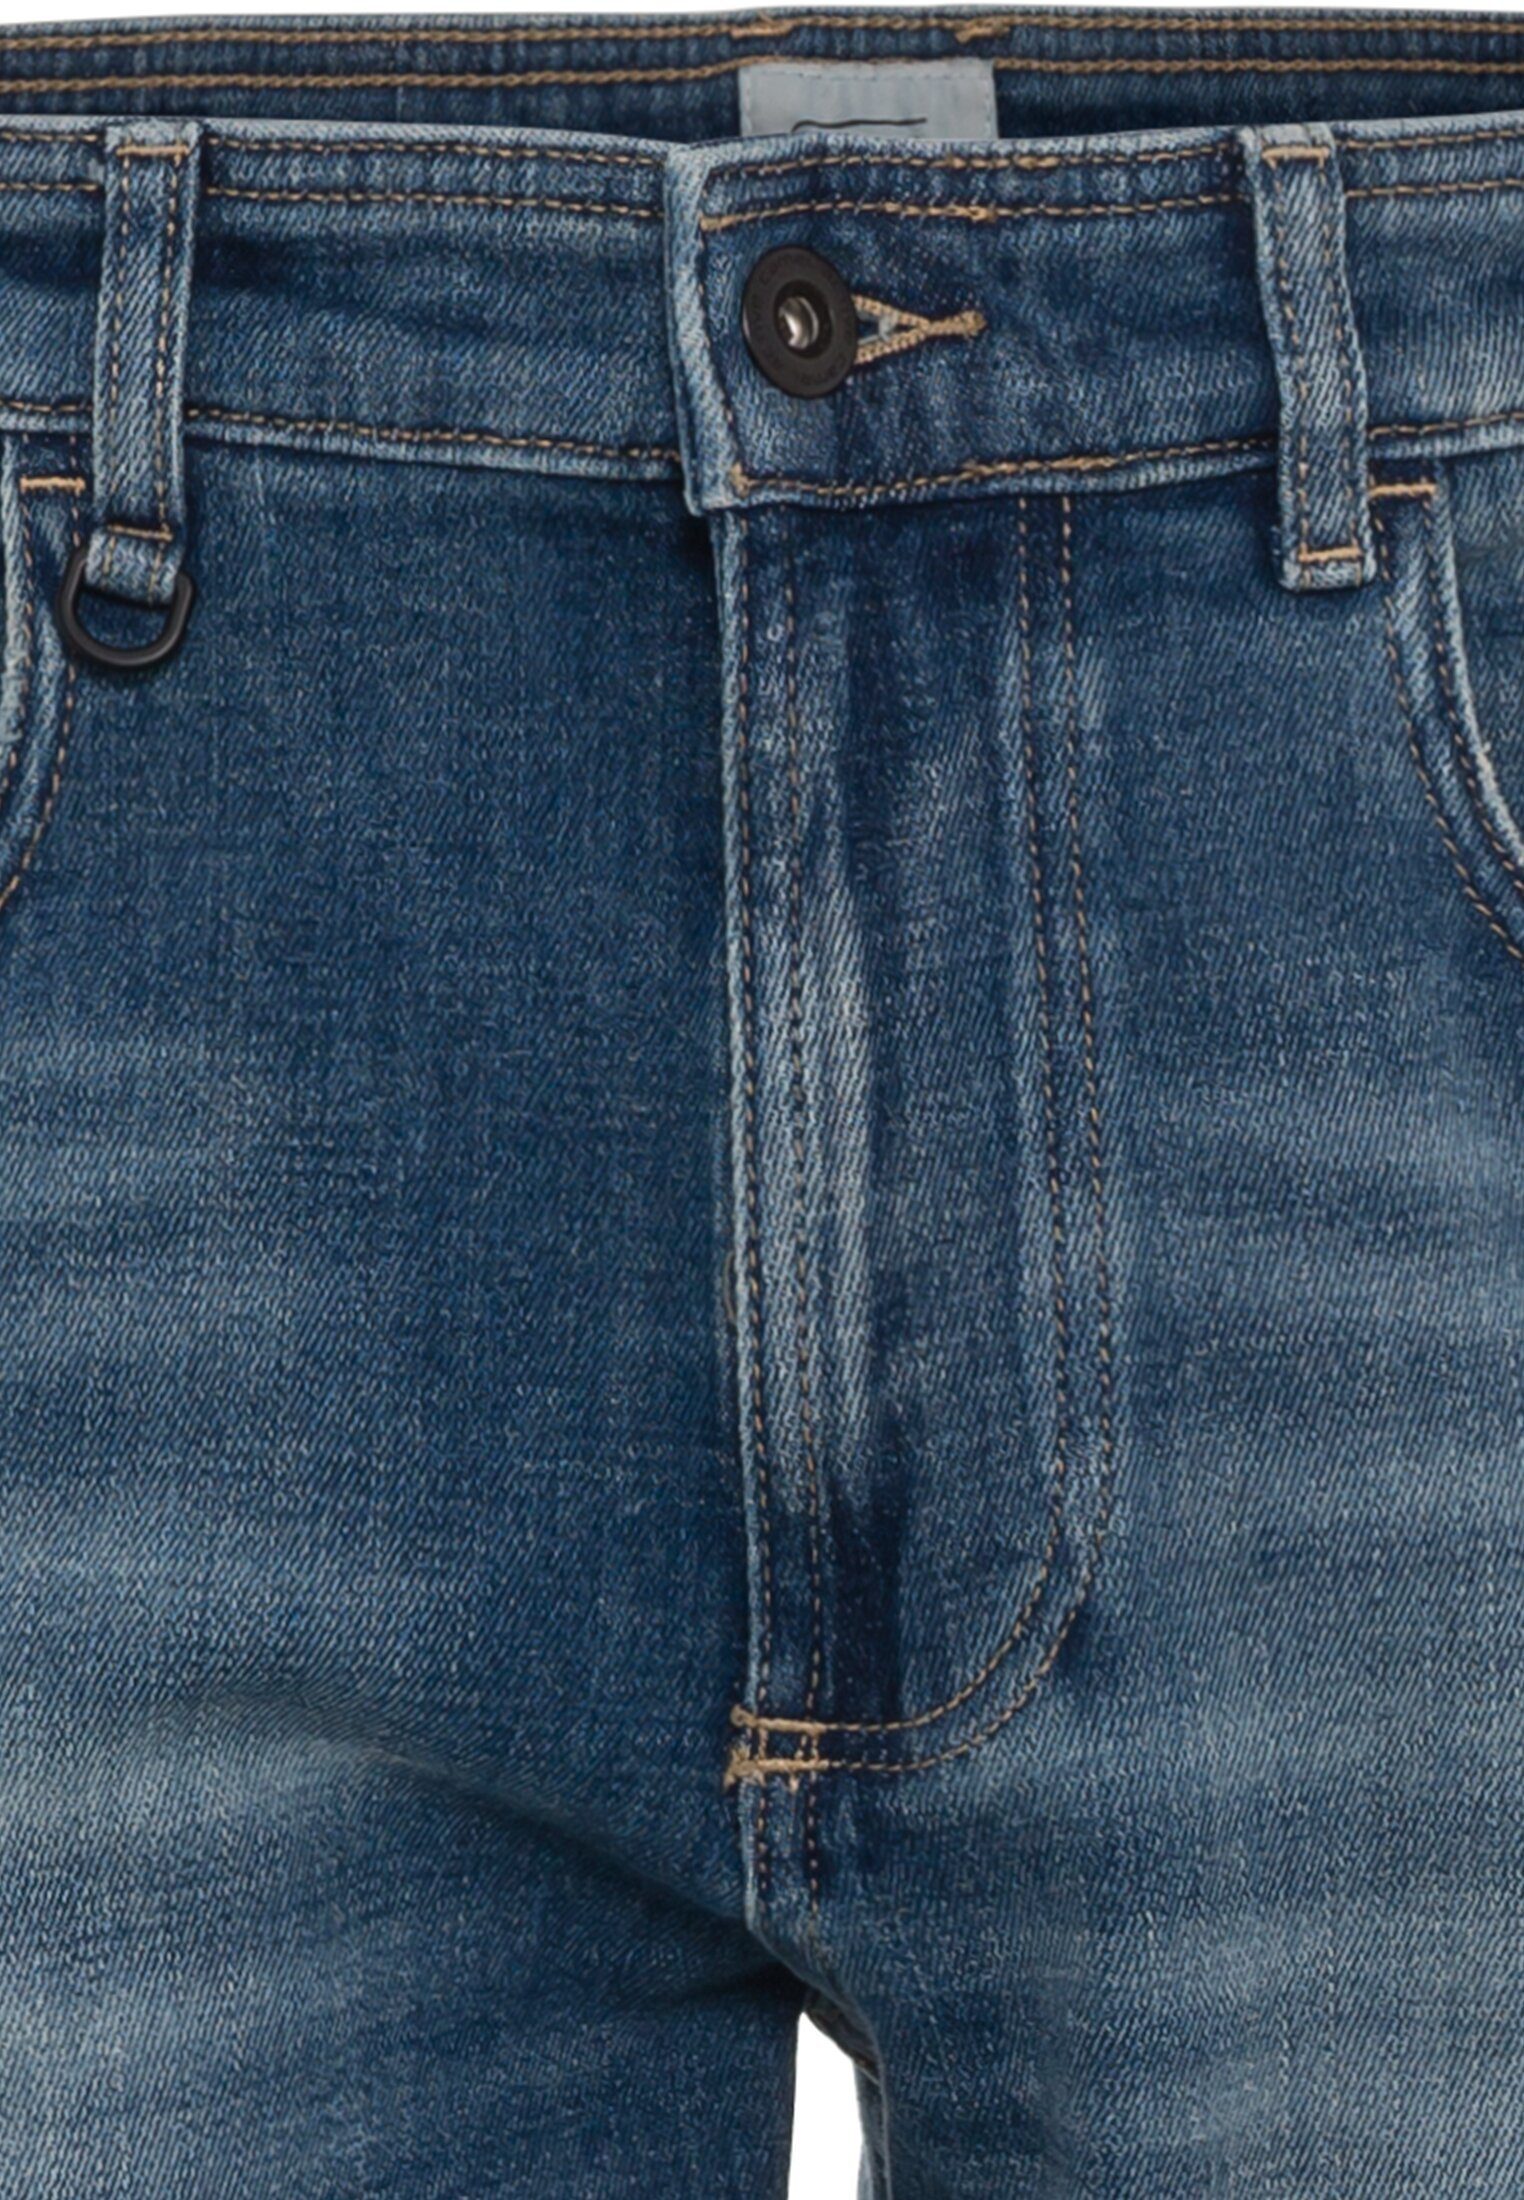 mit Fit 5-Pocket-Jeans Tapered camel Jeans Smartphone Tasche active